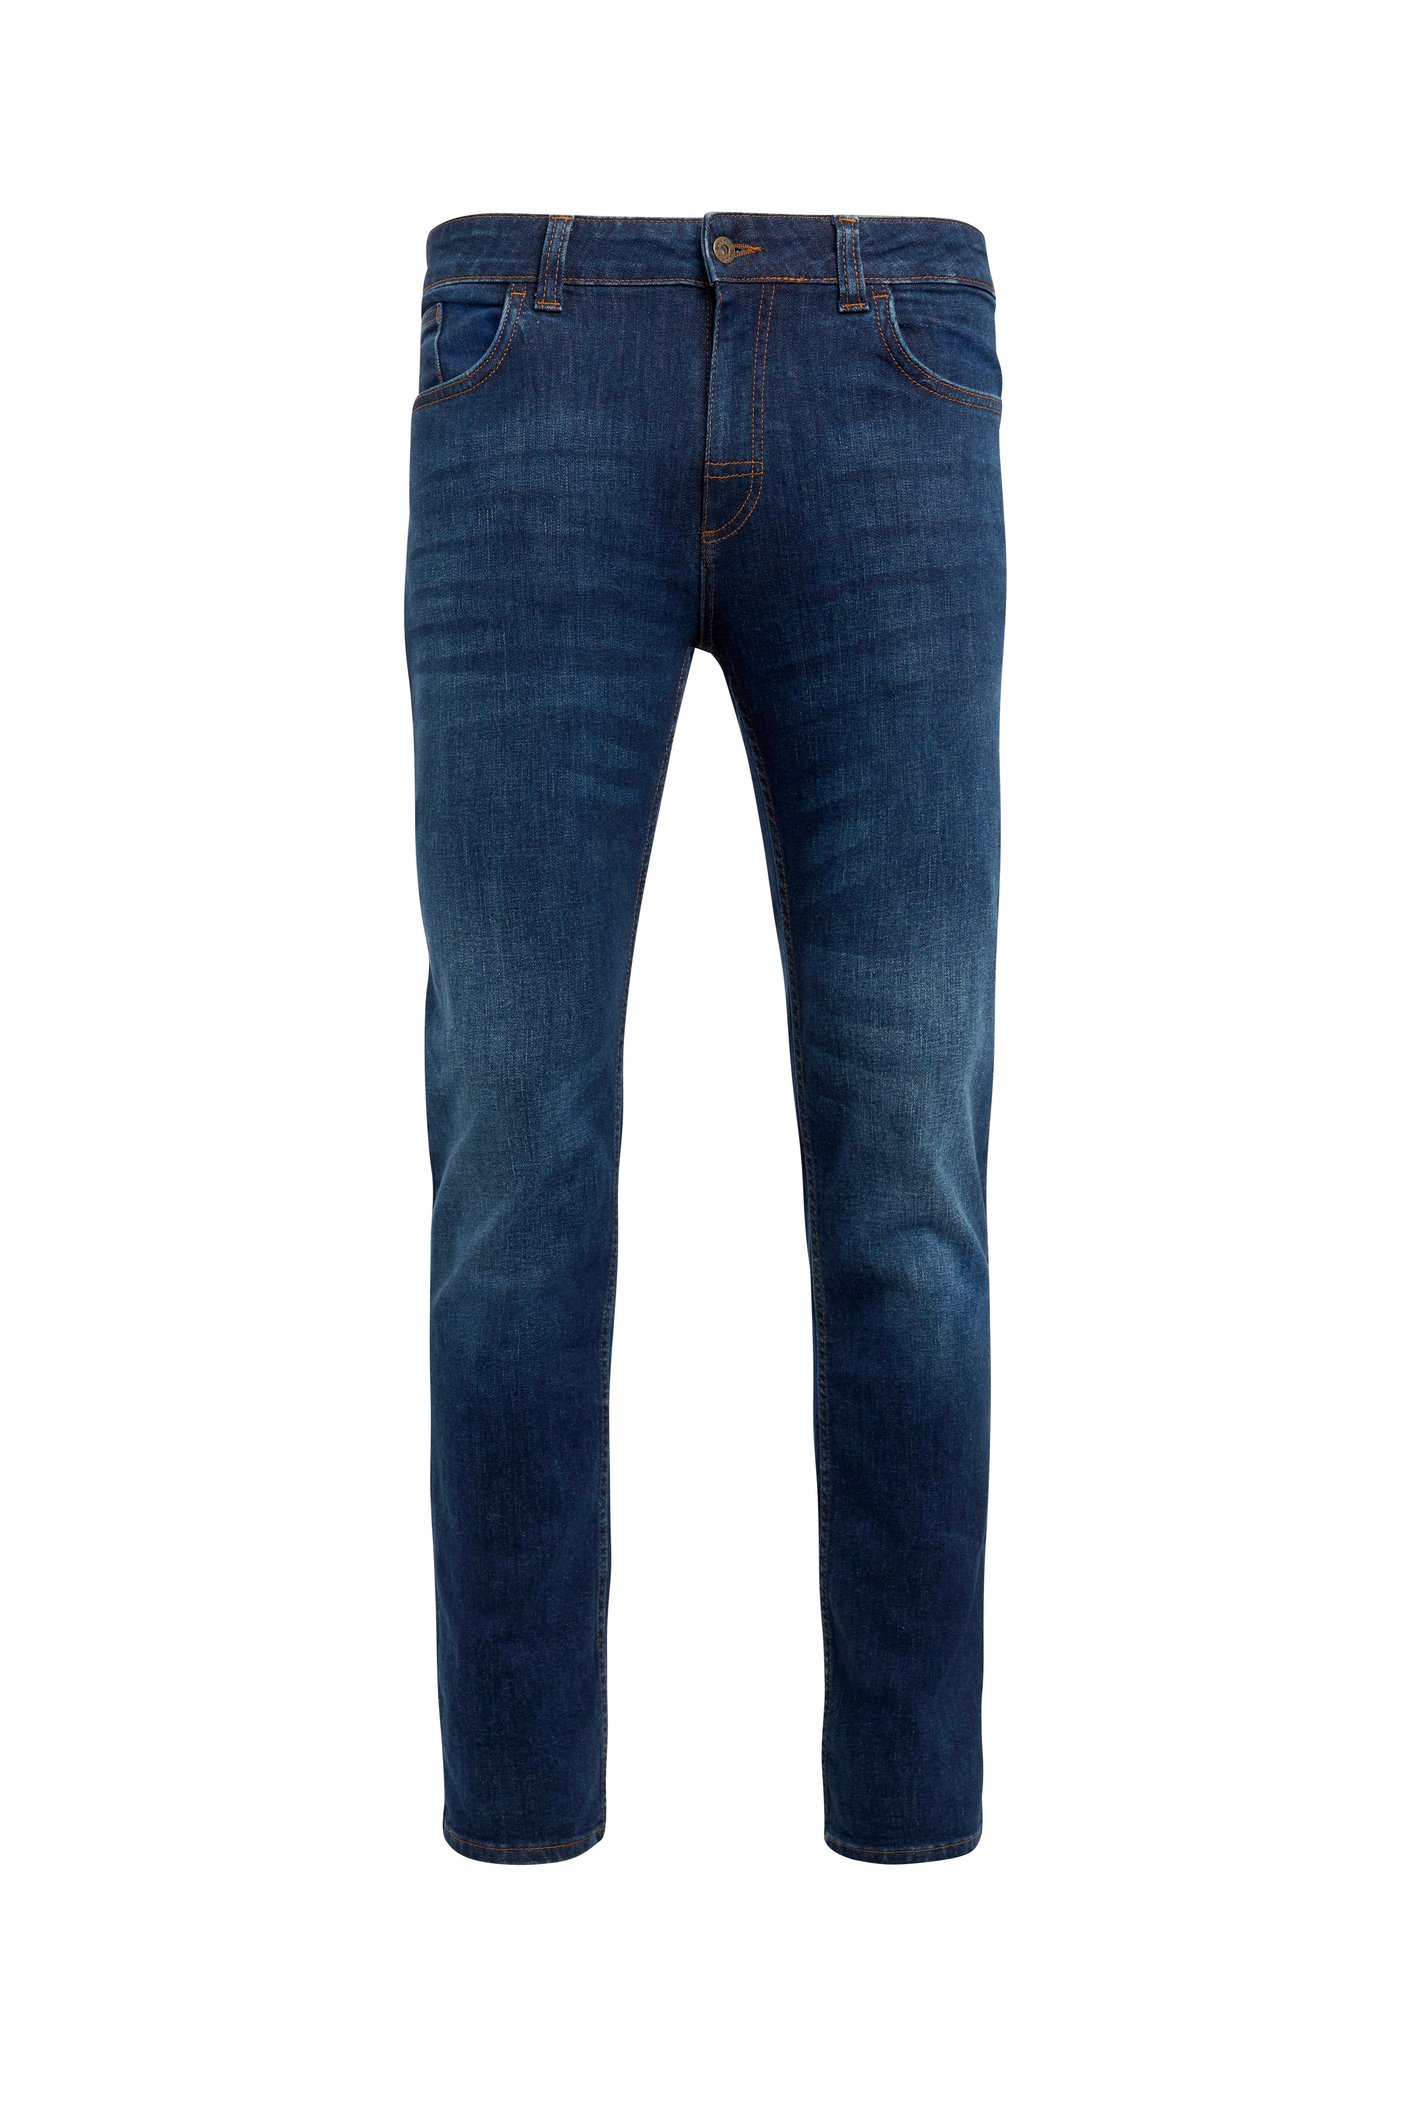 Weird Fish Robson Organic Classic Stretch Denim Jeans Indigo Size 34 Long